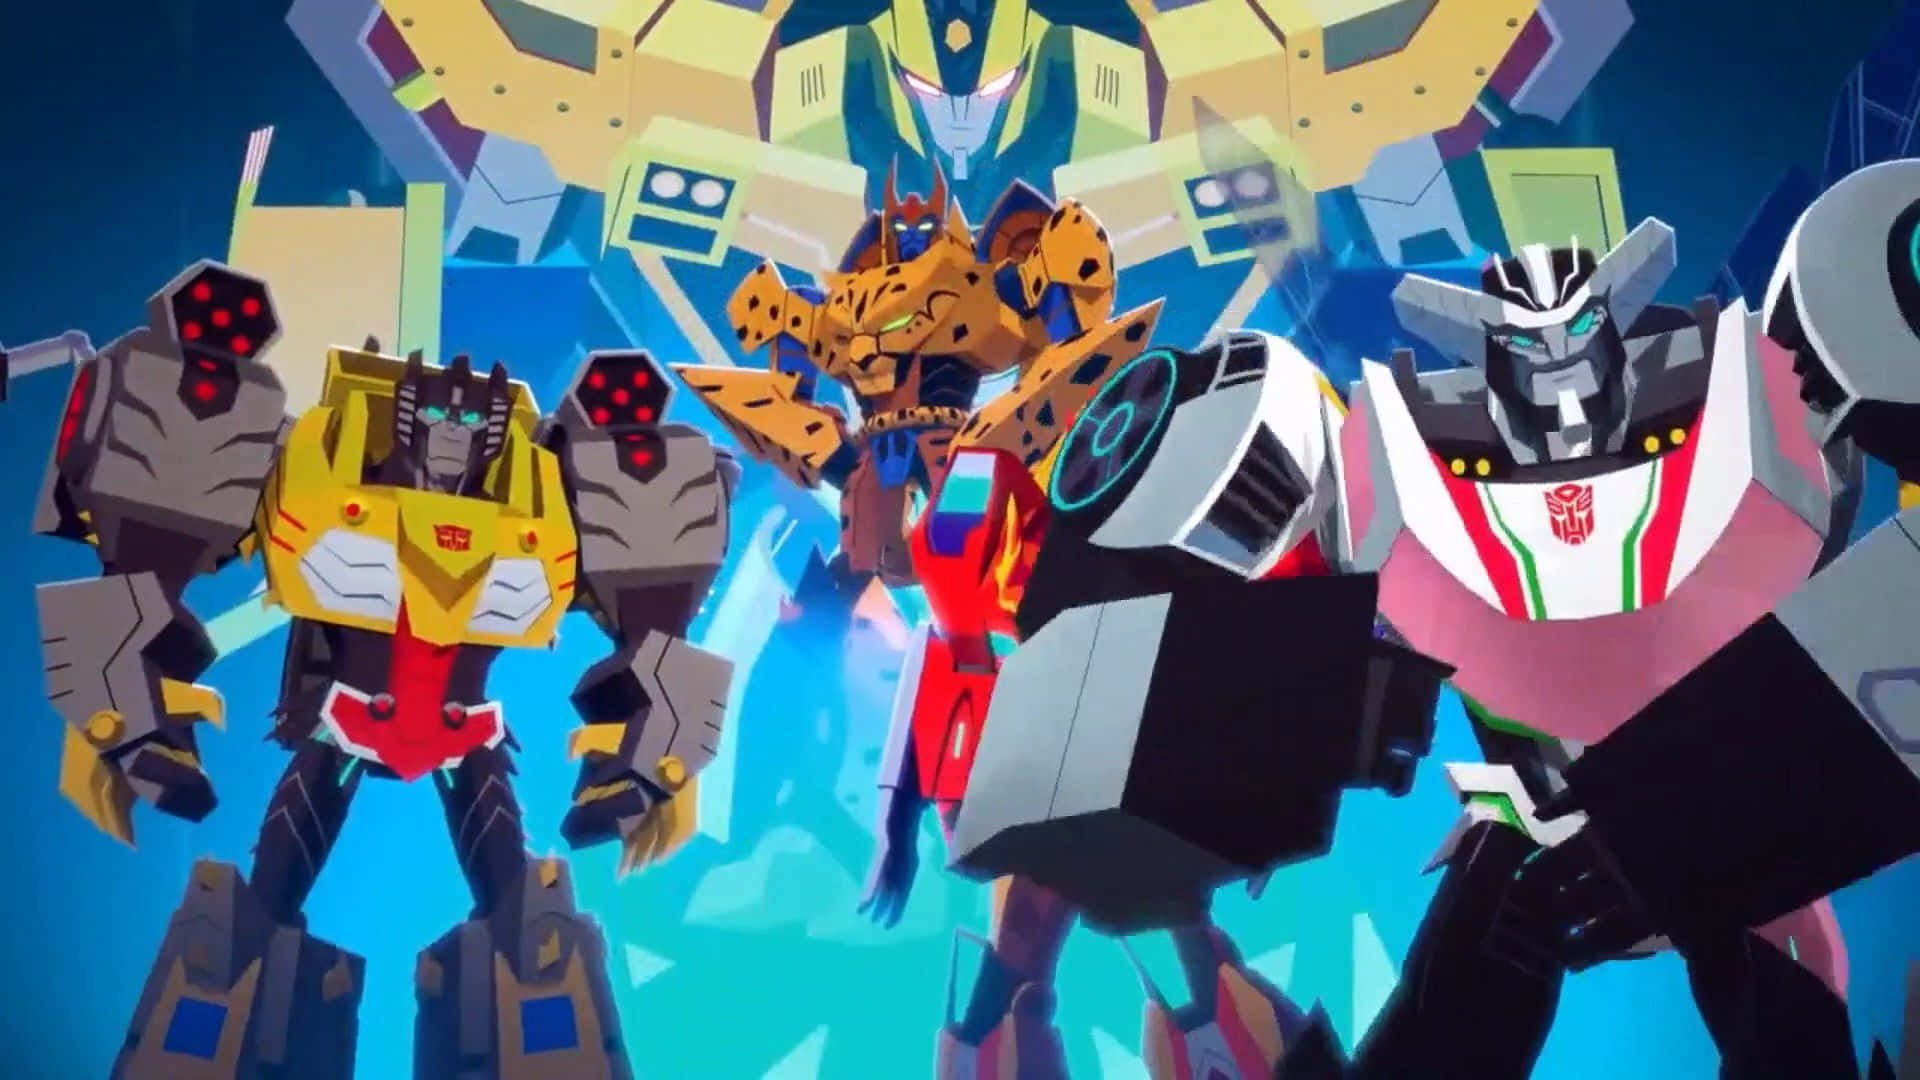 Transformers Cyberverse Wallpaper